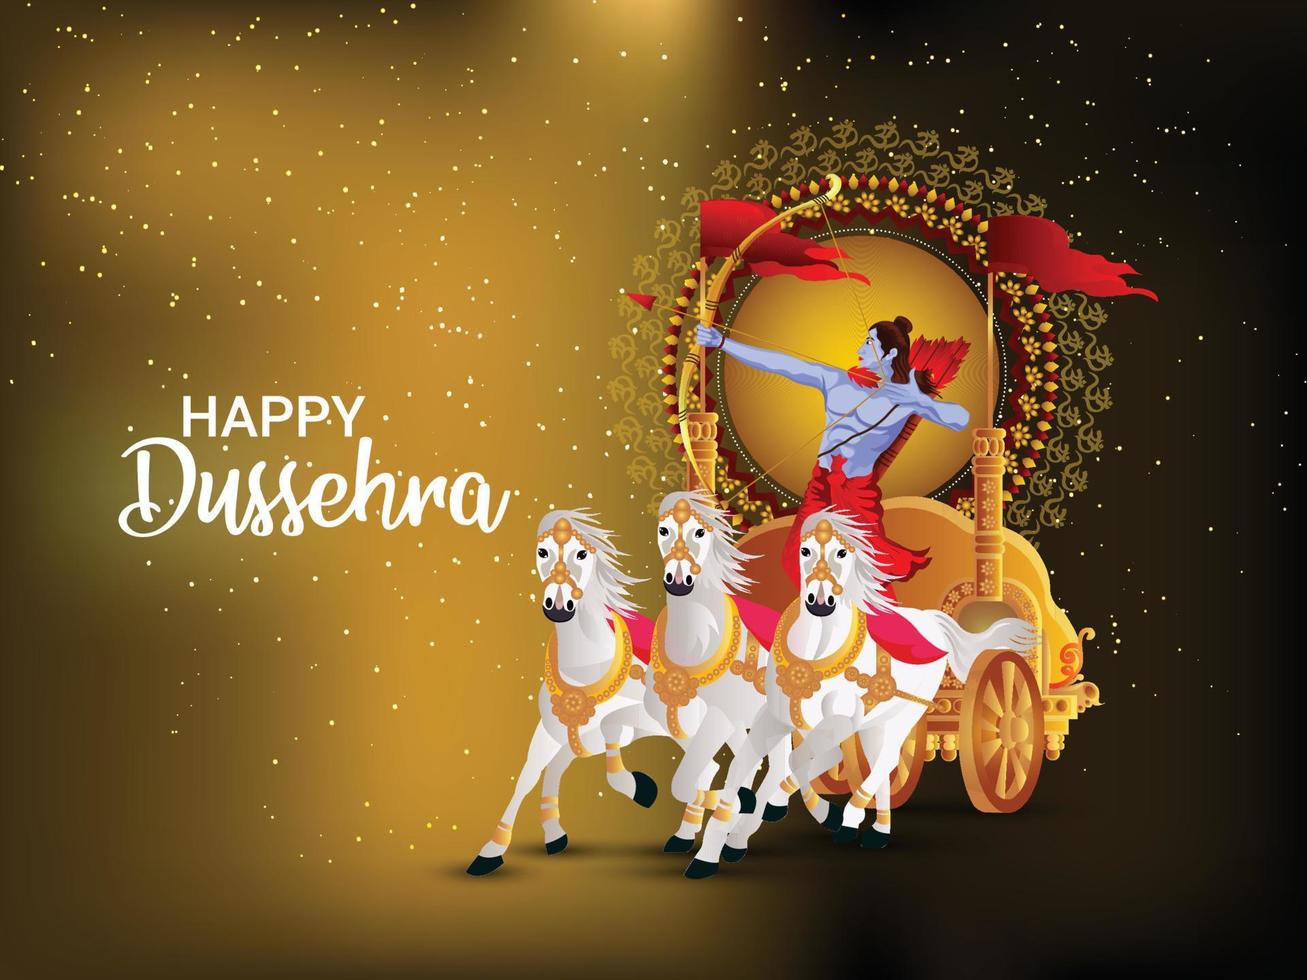 Happy dussehra celebration card lord rama killed ravana vector